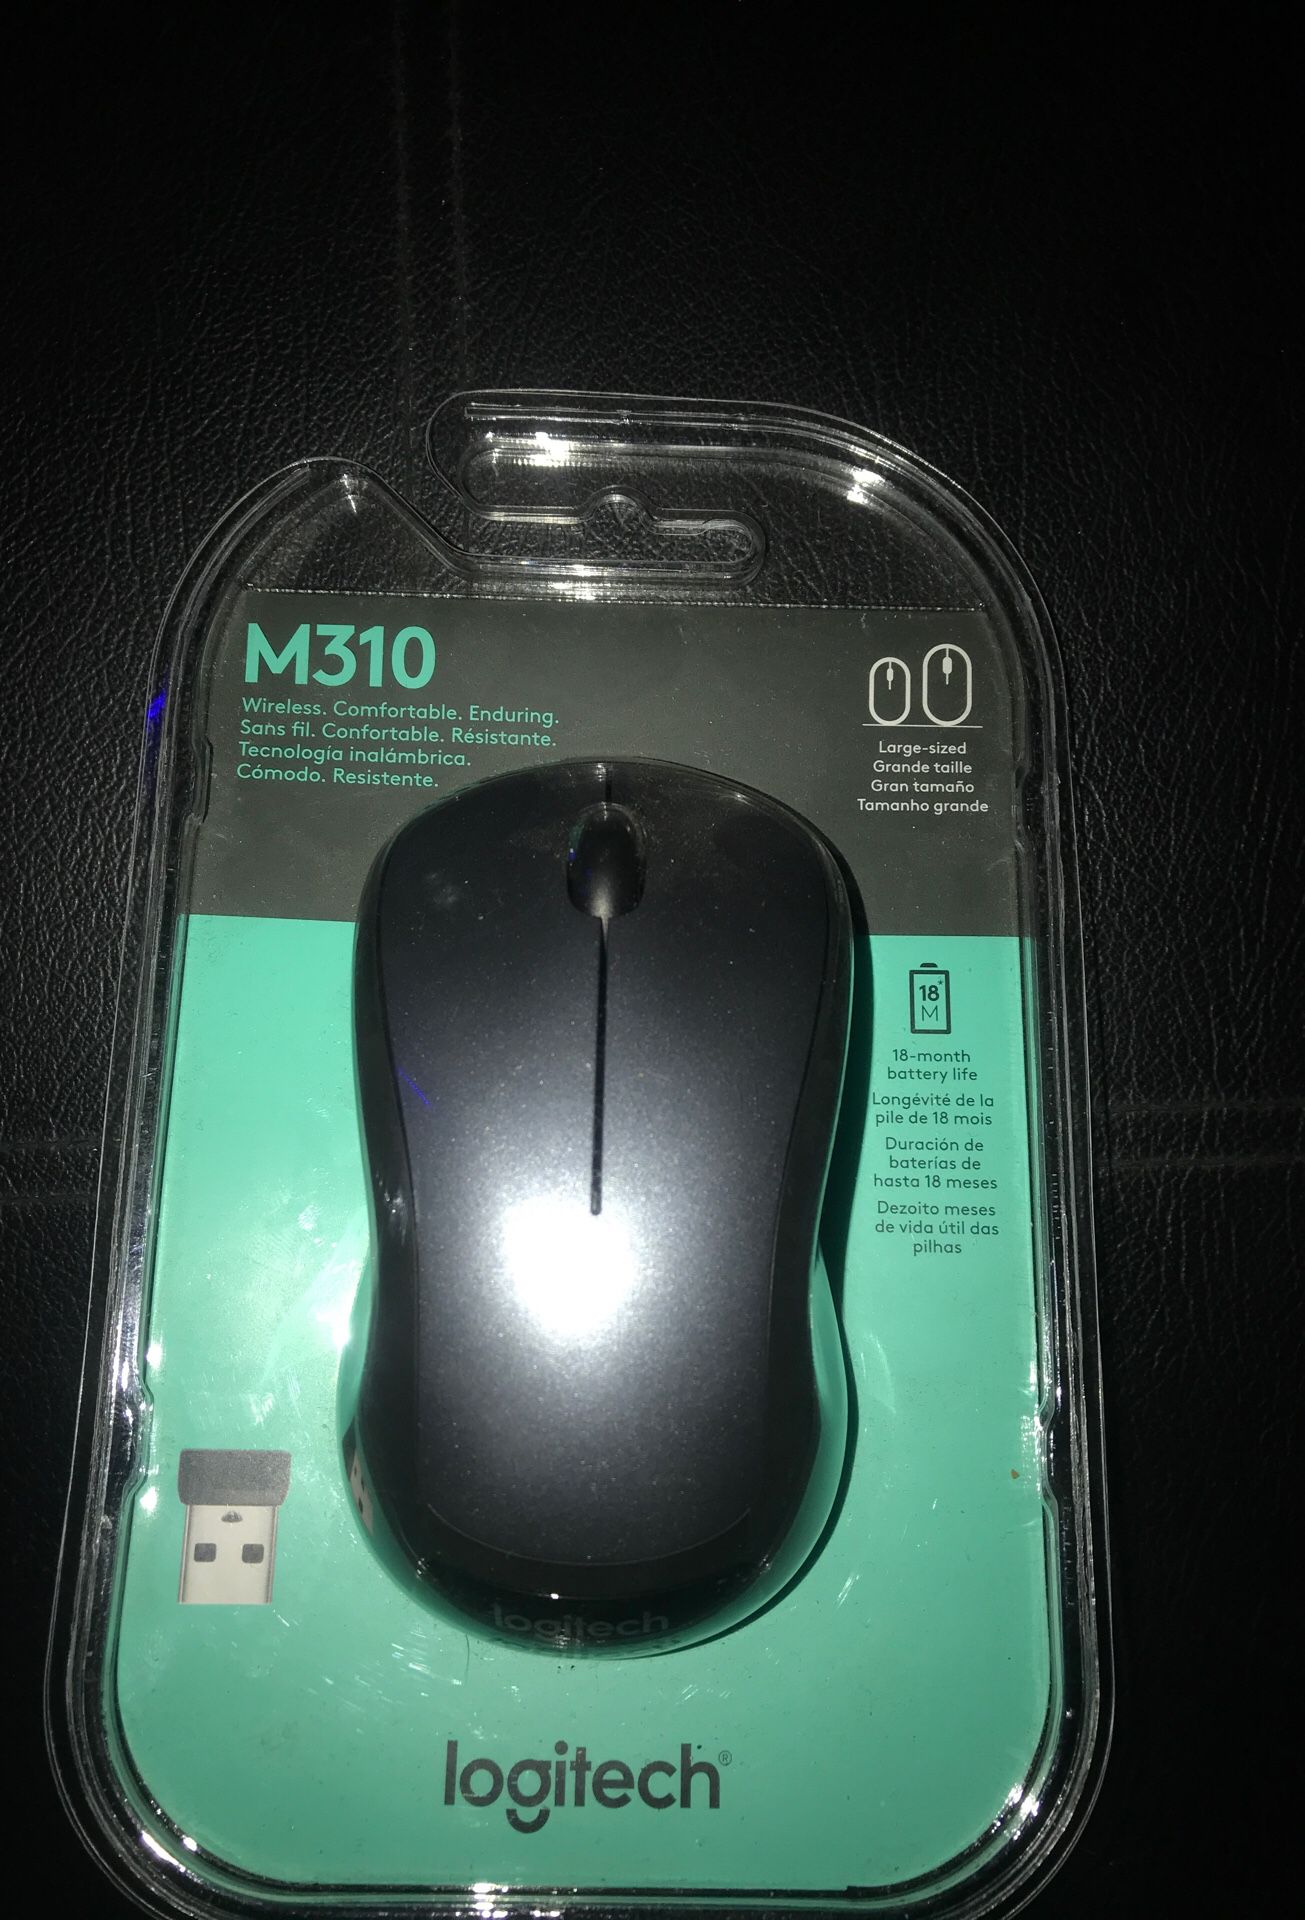 Logitech M310 wireless usb mouse